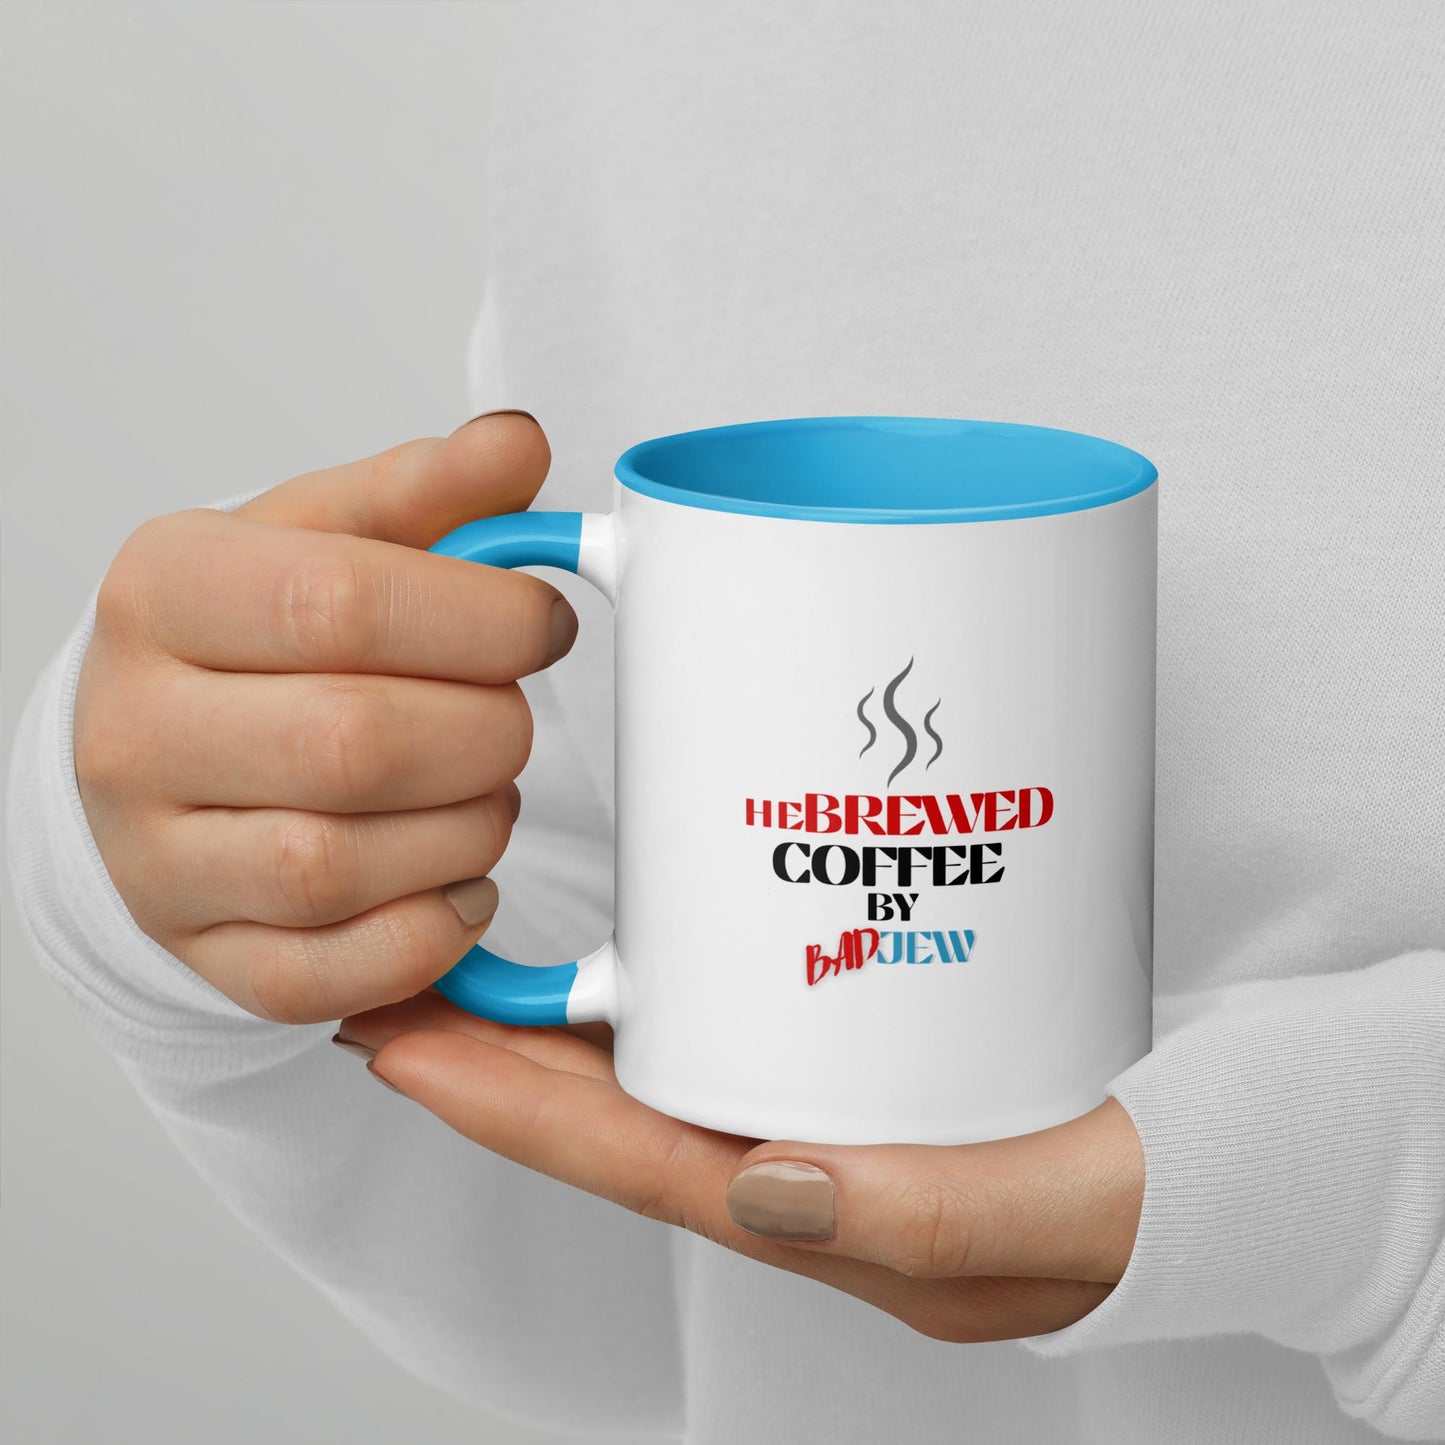 heBrewed Coffee Mug by Bad Jew